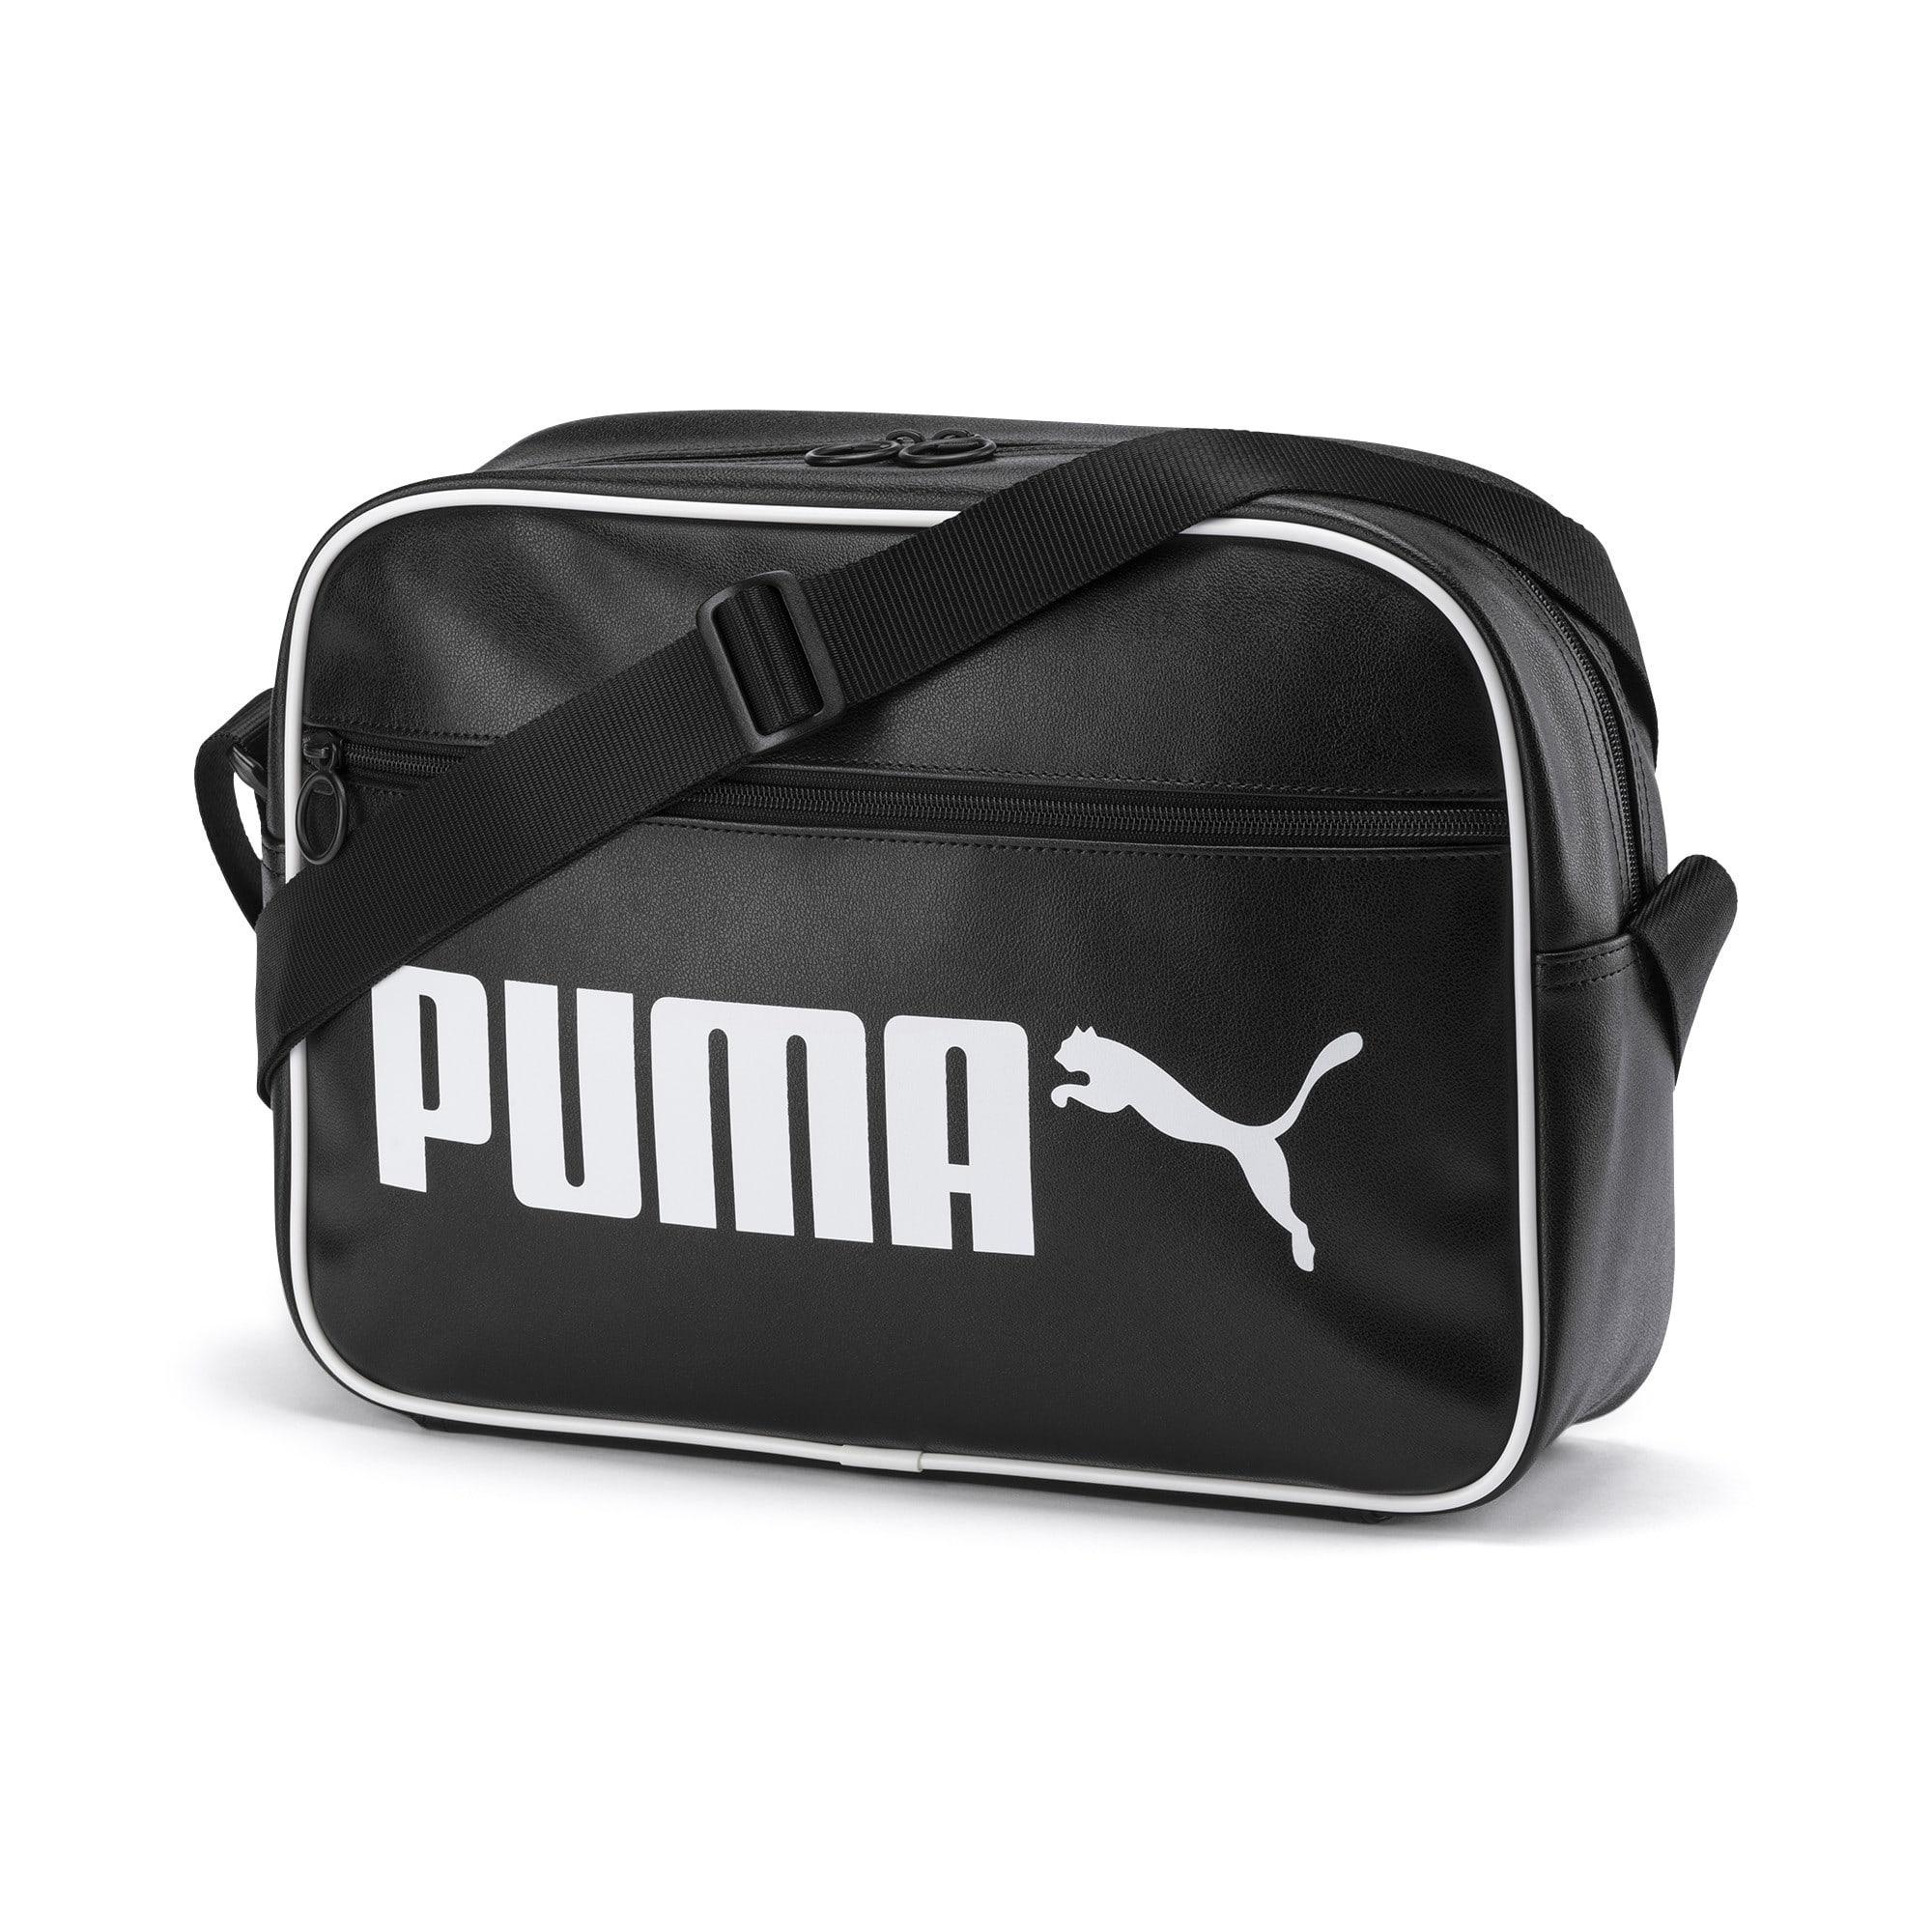 PUMA Synthetic Campus Reporter Retro Shoulder Bag in Black for Men - Lyst